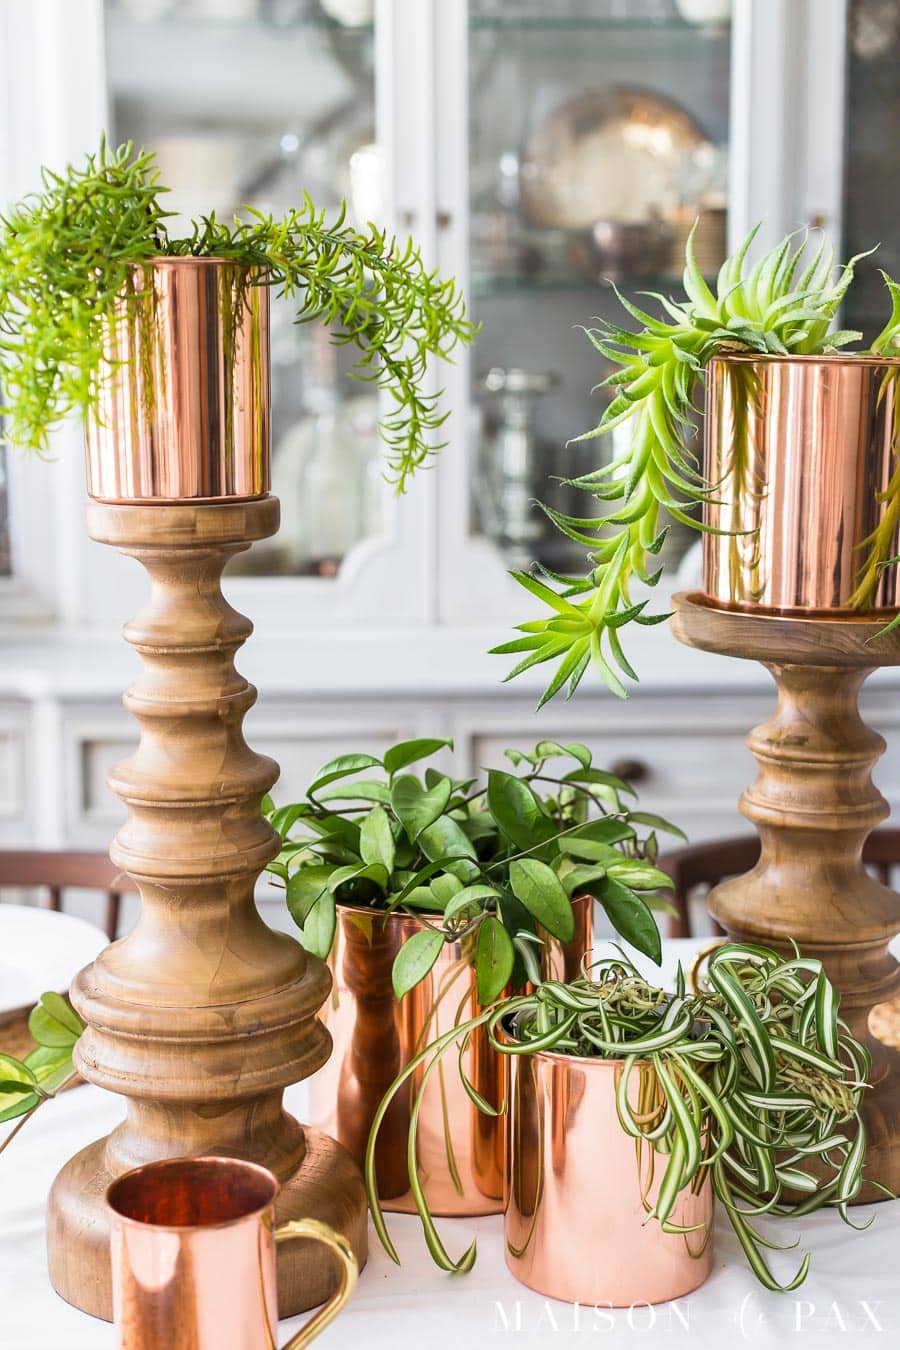 copper canisters placed atop wooden candlesticks make a simple centerpiece | Maison de Pax